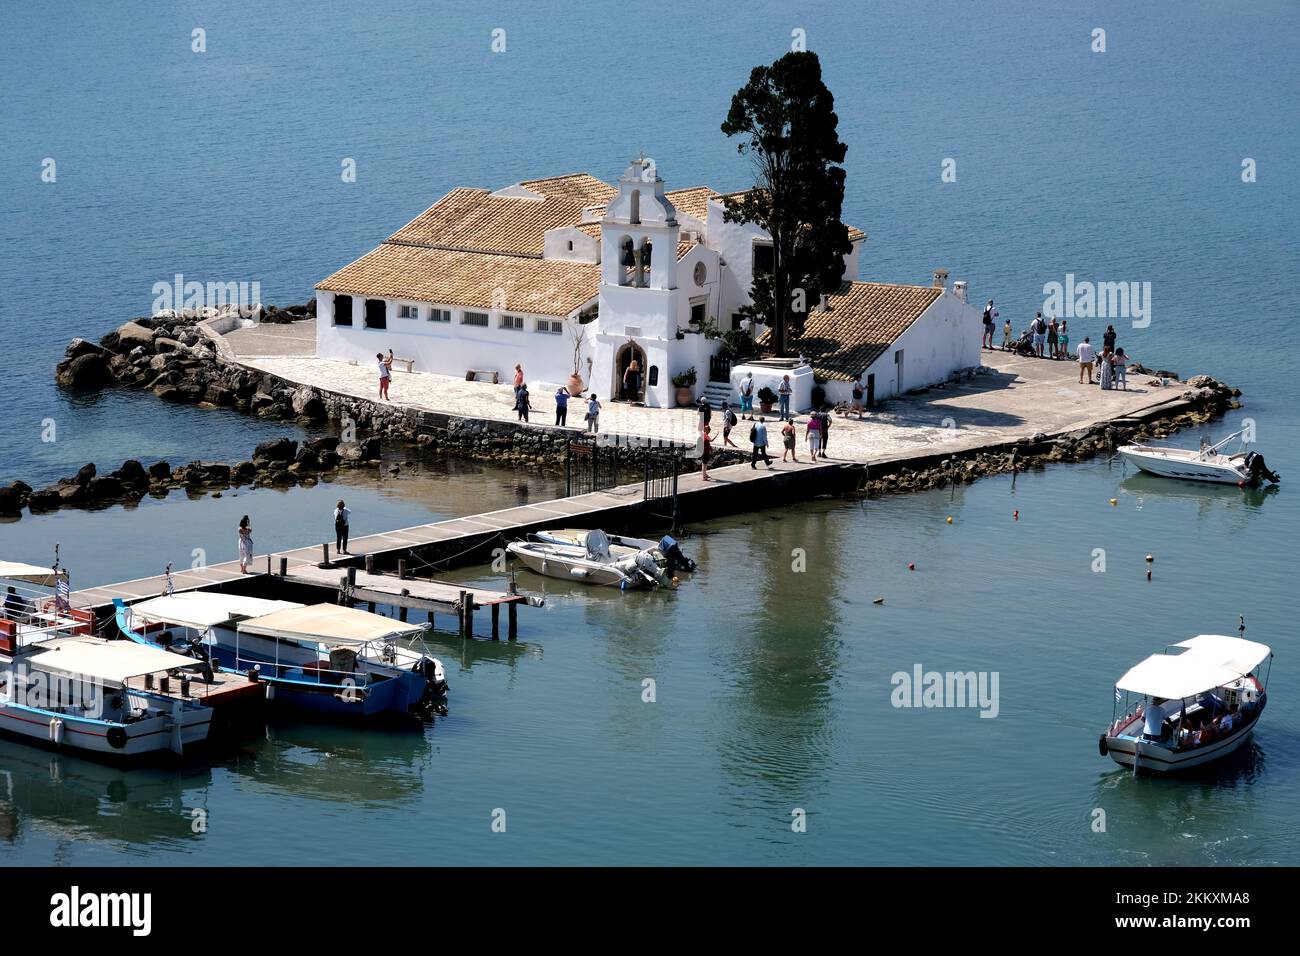 The Monastery on Mouse Island in Corfu Greece Stock Photo